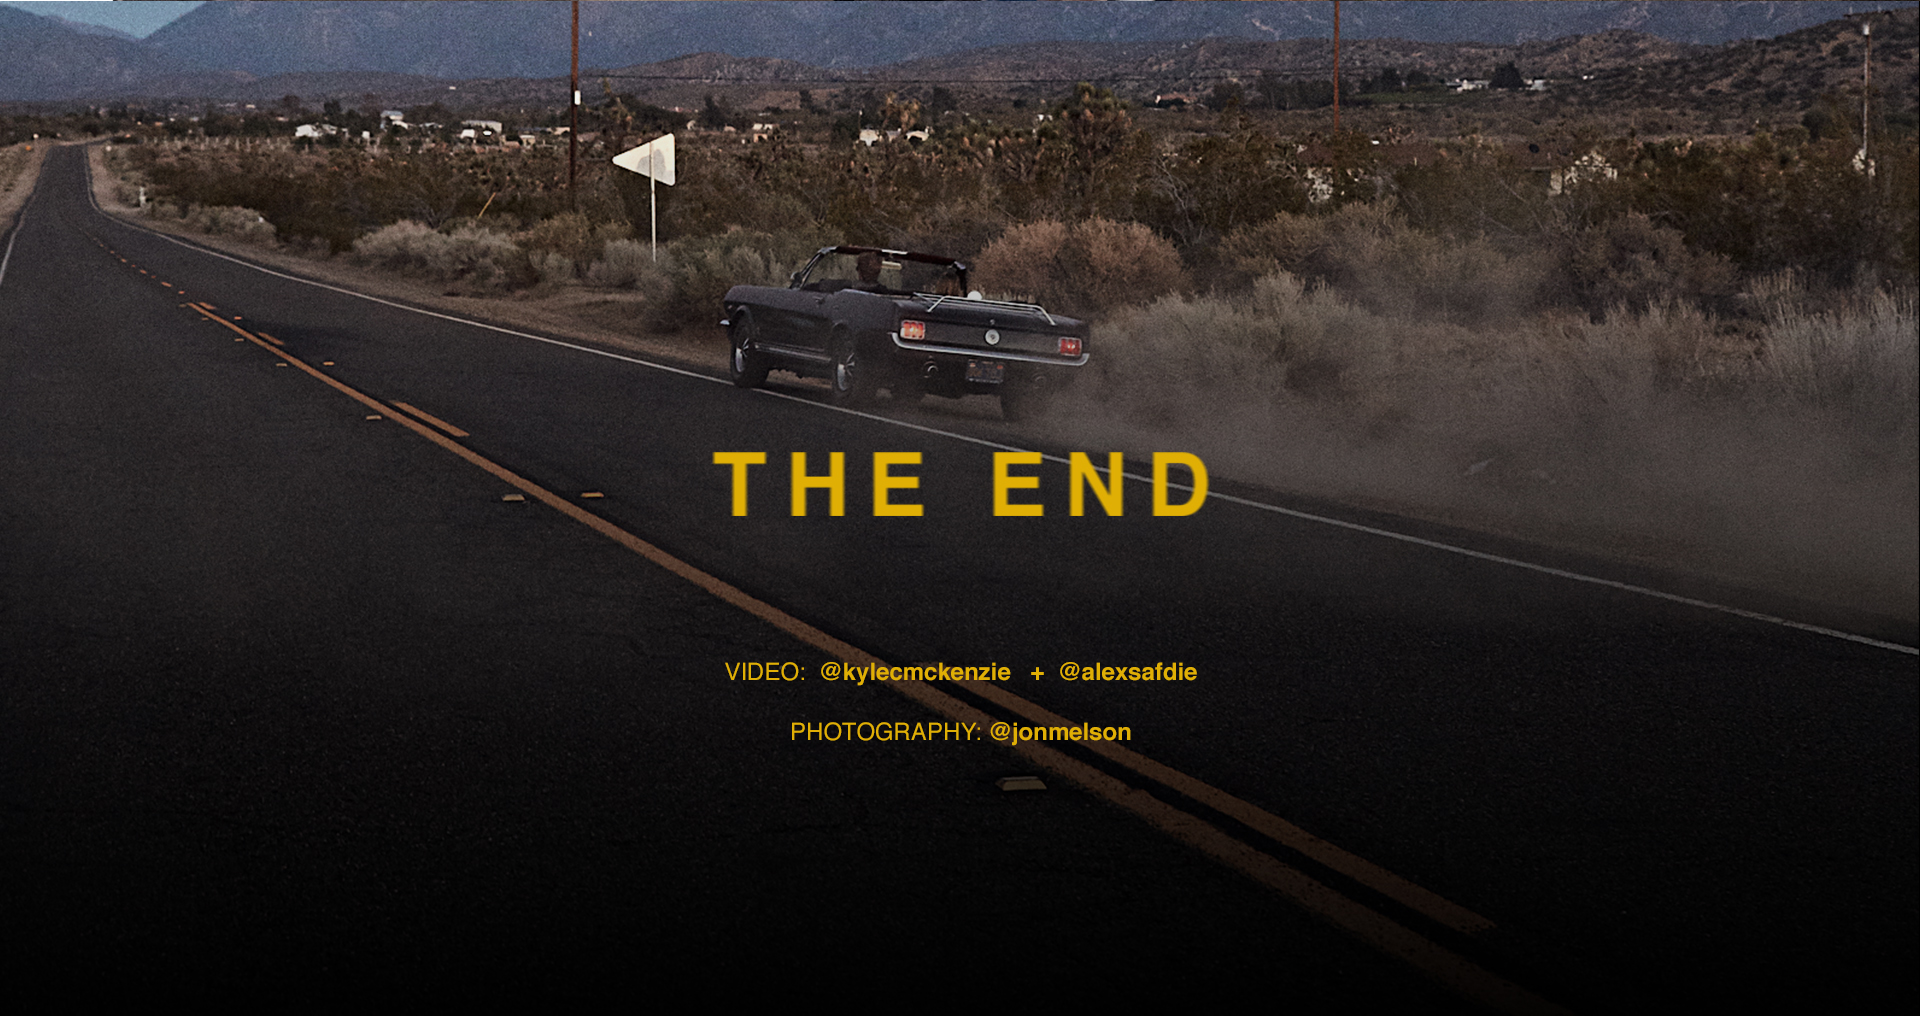 The end. Video: @kylecmckenzie + @alexsafdie Photography: @jonmelson